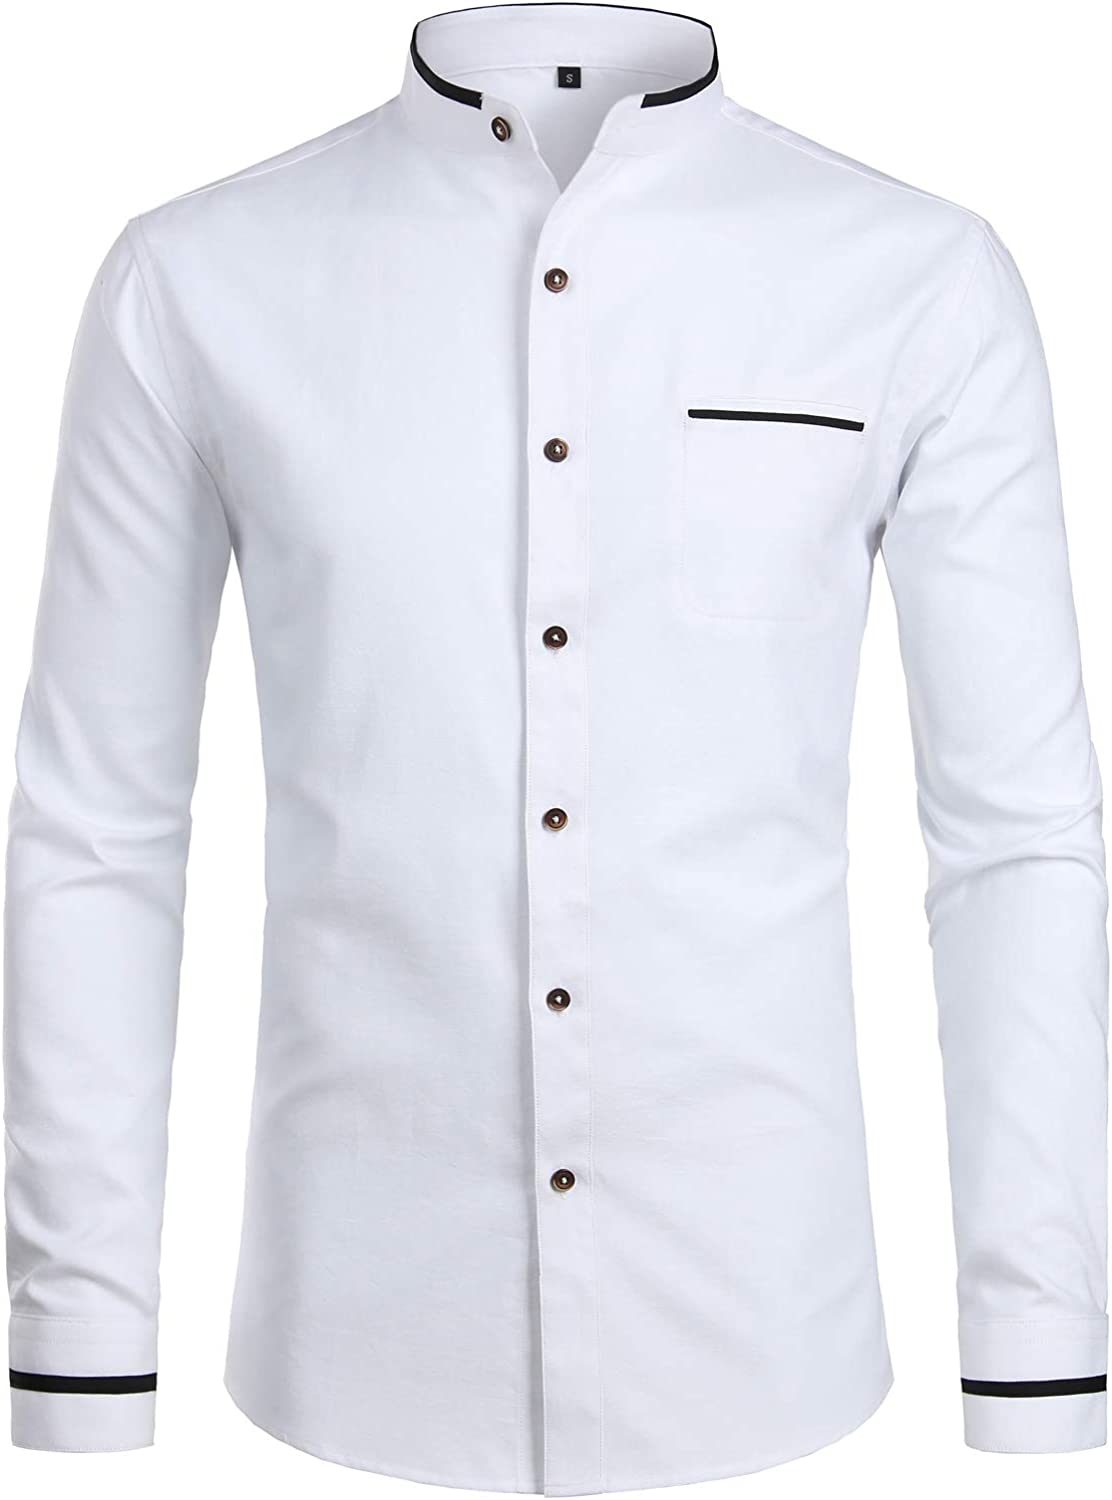  HUXUAN Men's Embroidery White Shirts Slim Fit Mandarin